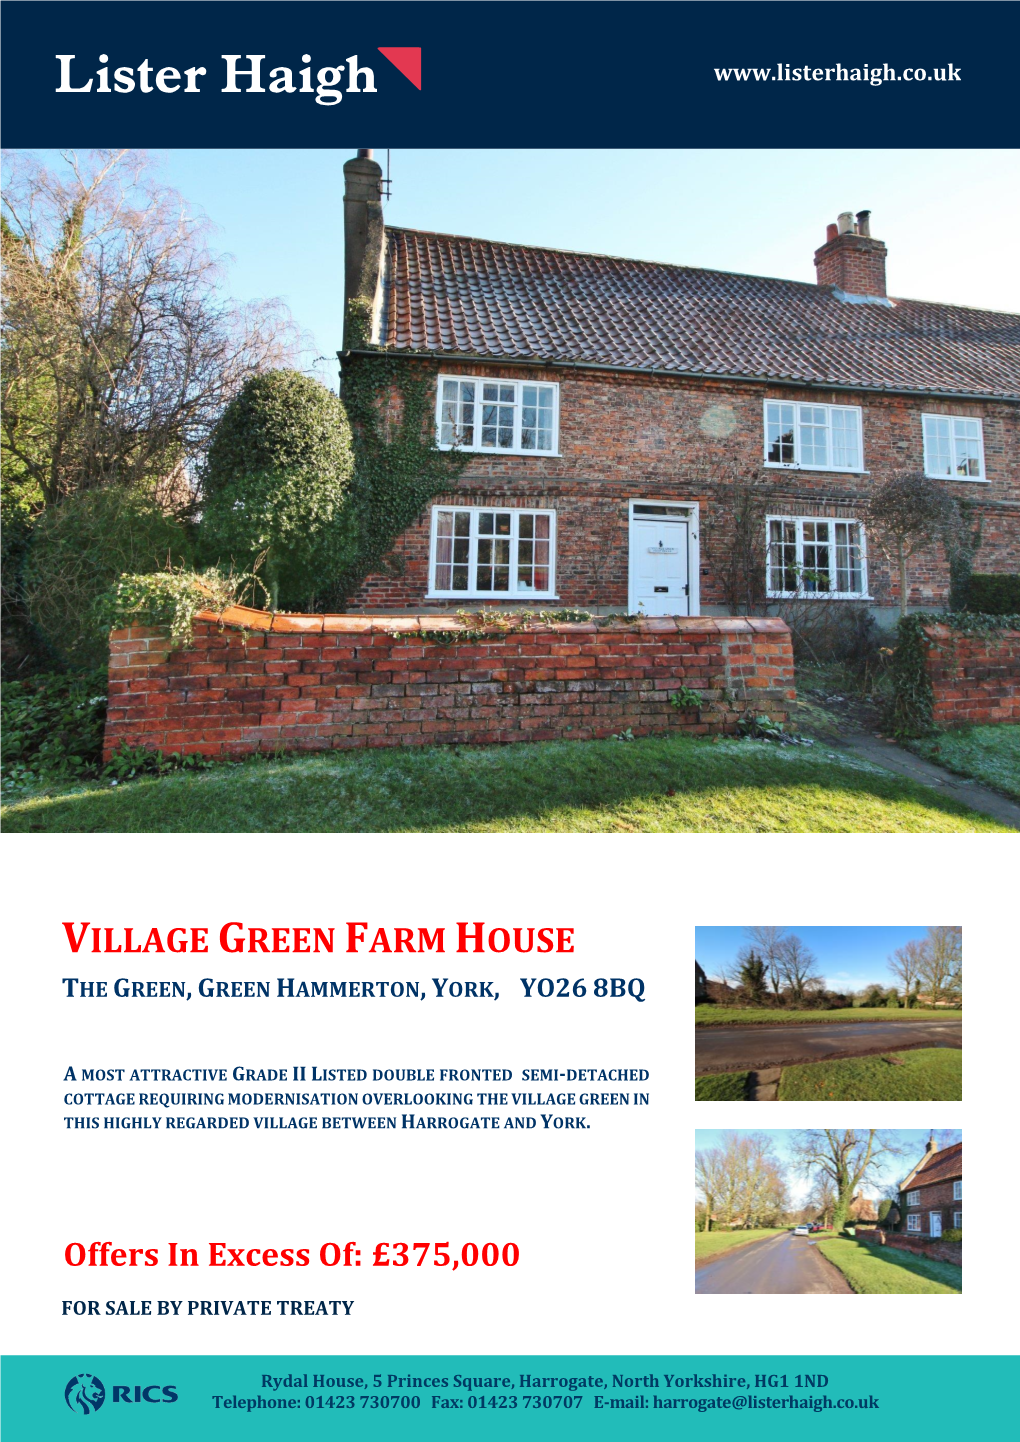 Village Green Farm House the Green, Green Hammerton, York, Yo26 8Bq